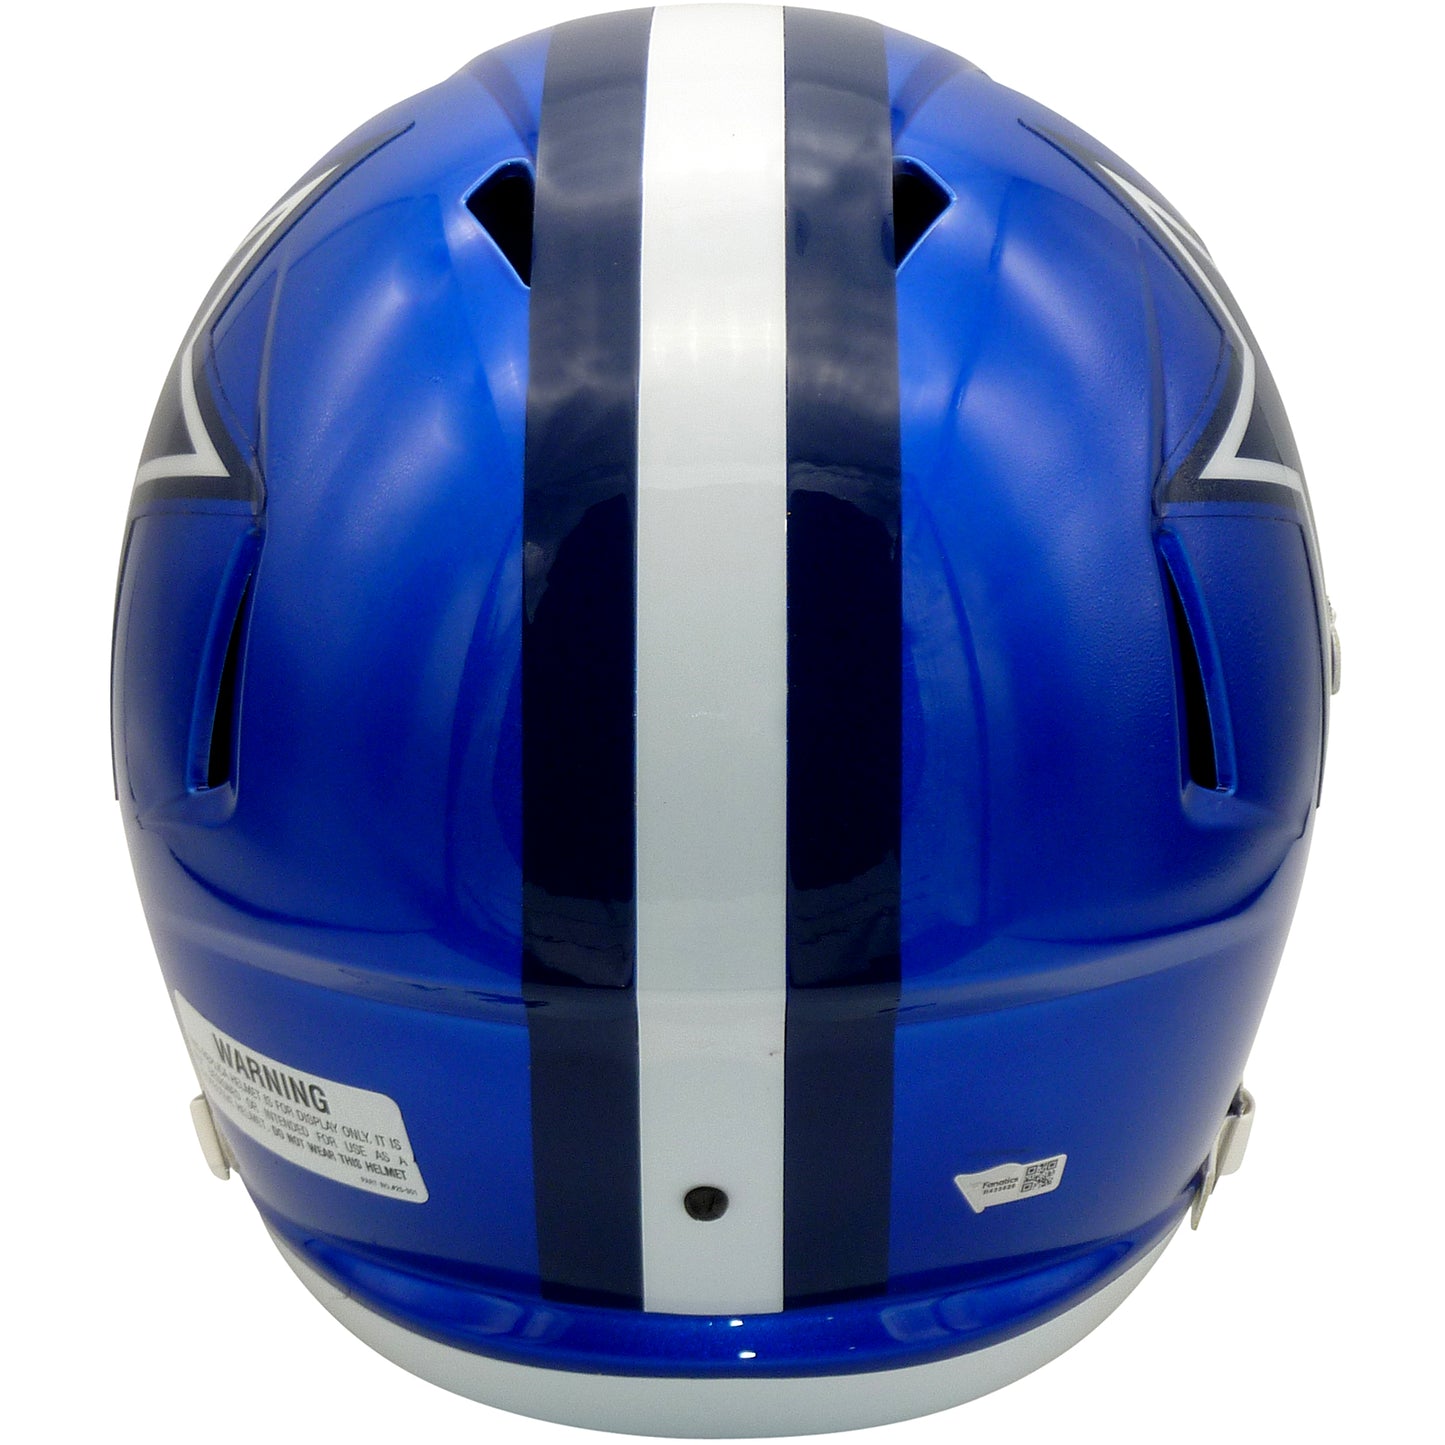 Micah Parsons Autographed Dallas Cowboys FLASH Alternate Full-Size Replica Helmet - Fanatics